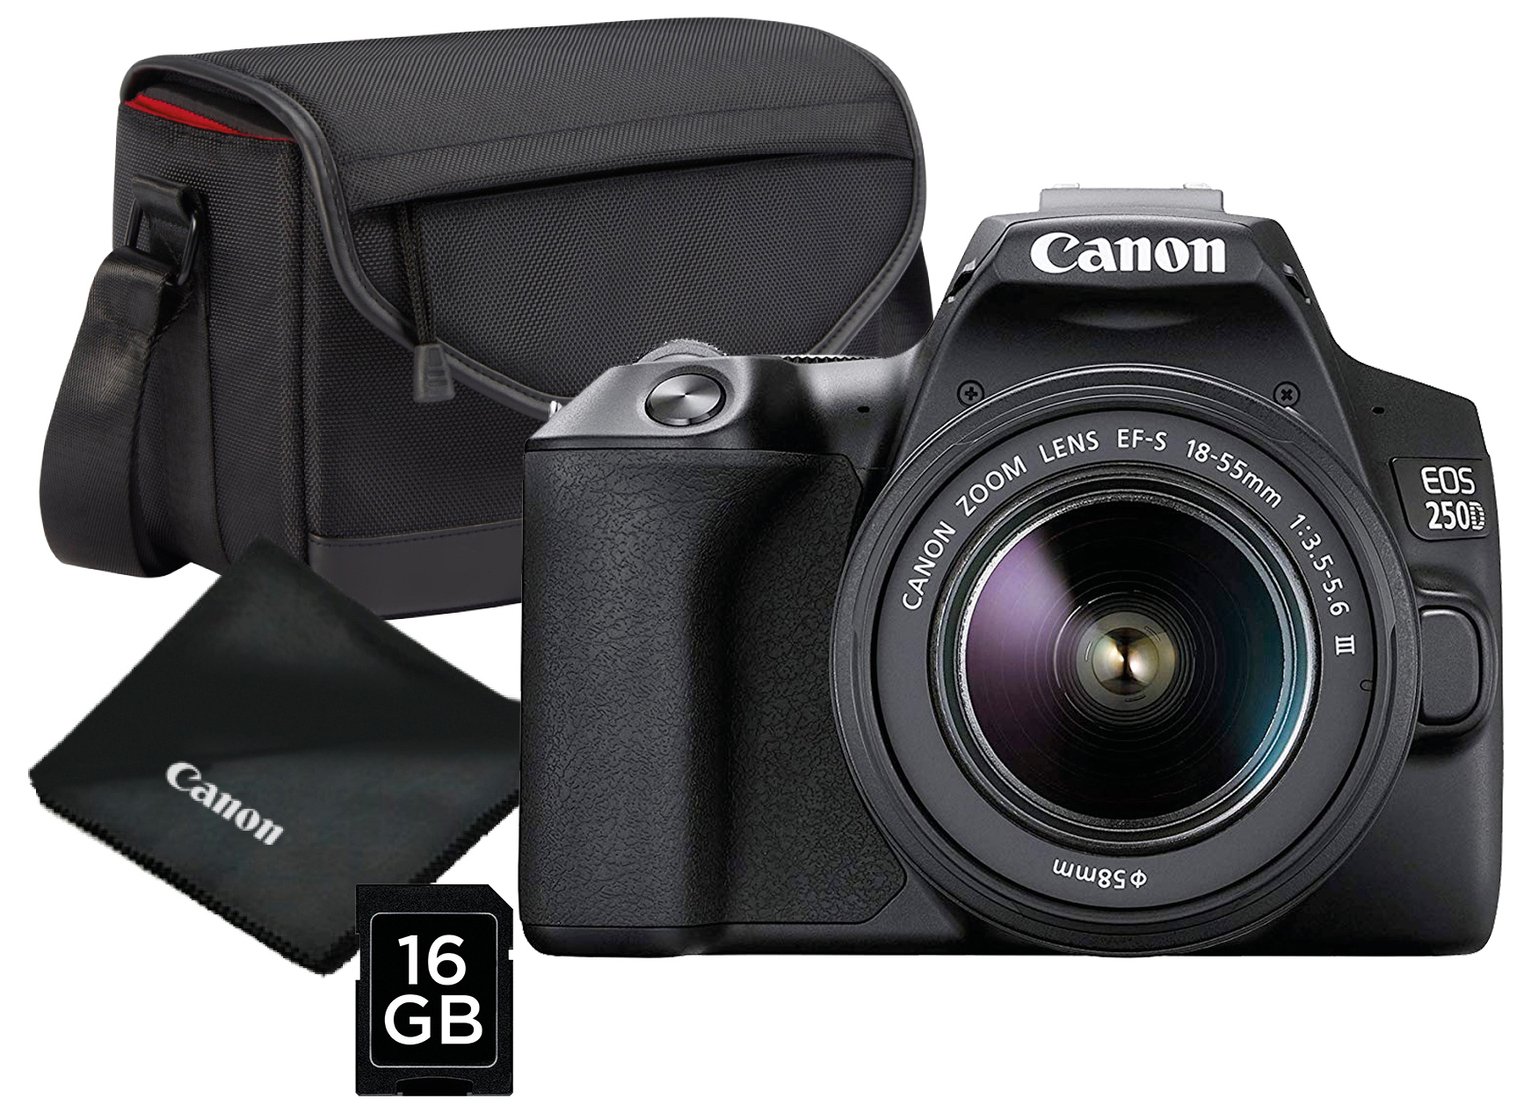 Canon EOS 250D DSLR Camera Body with 18-55mm DC Lens Bundle Review